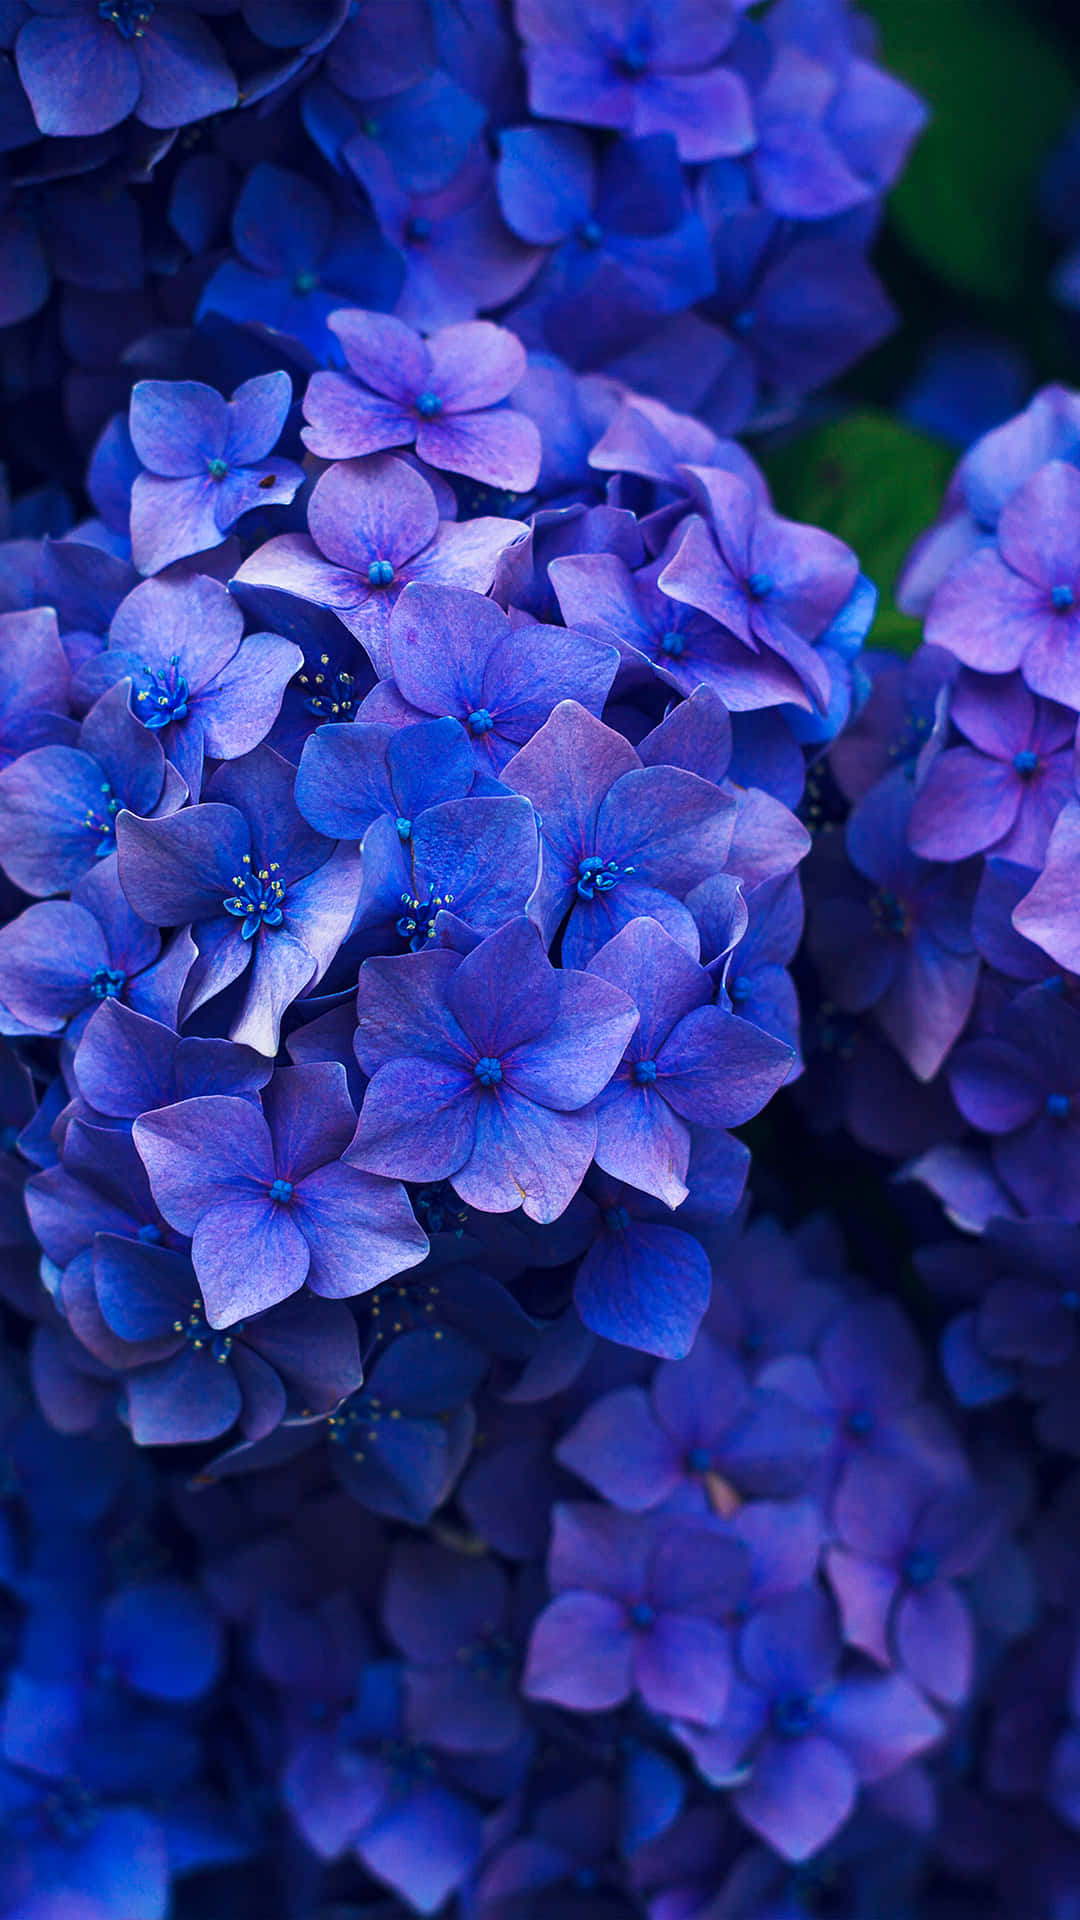 En levende blå blomst i fuld blomstring